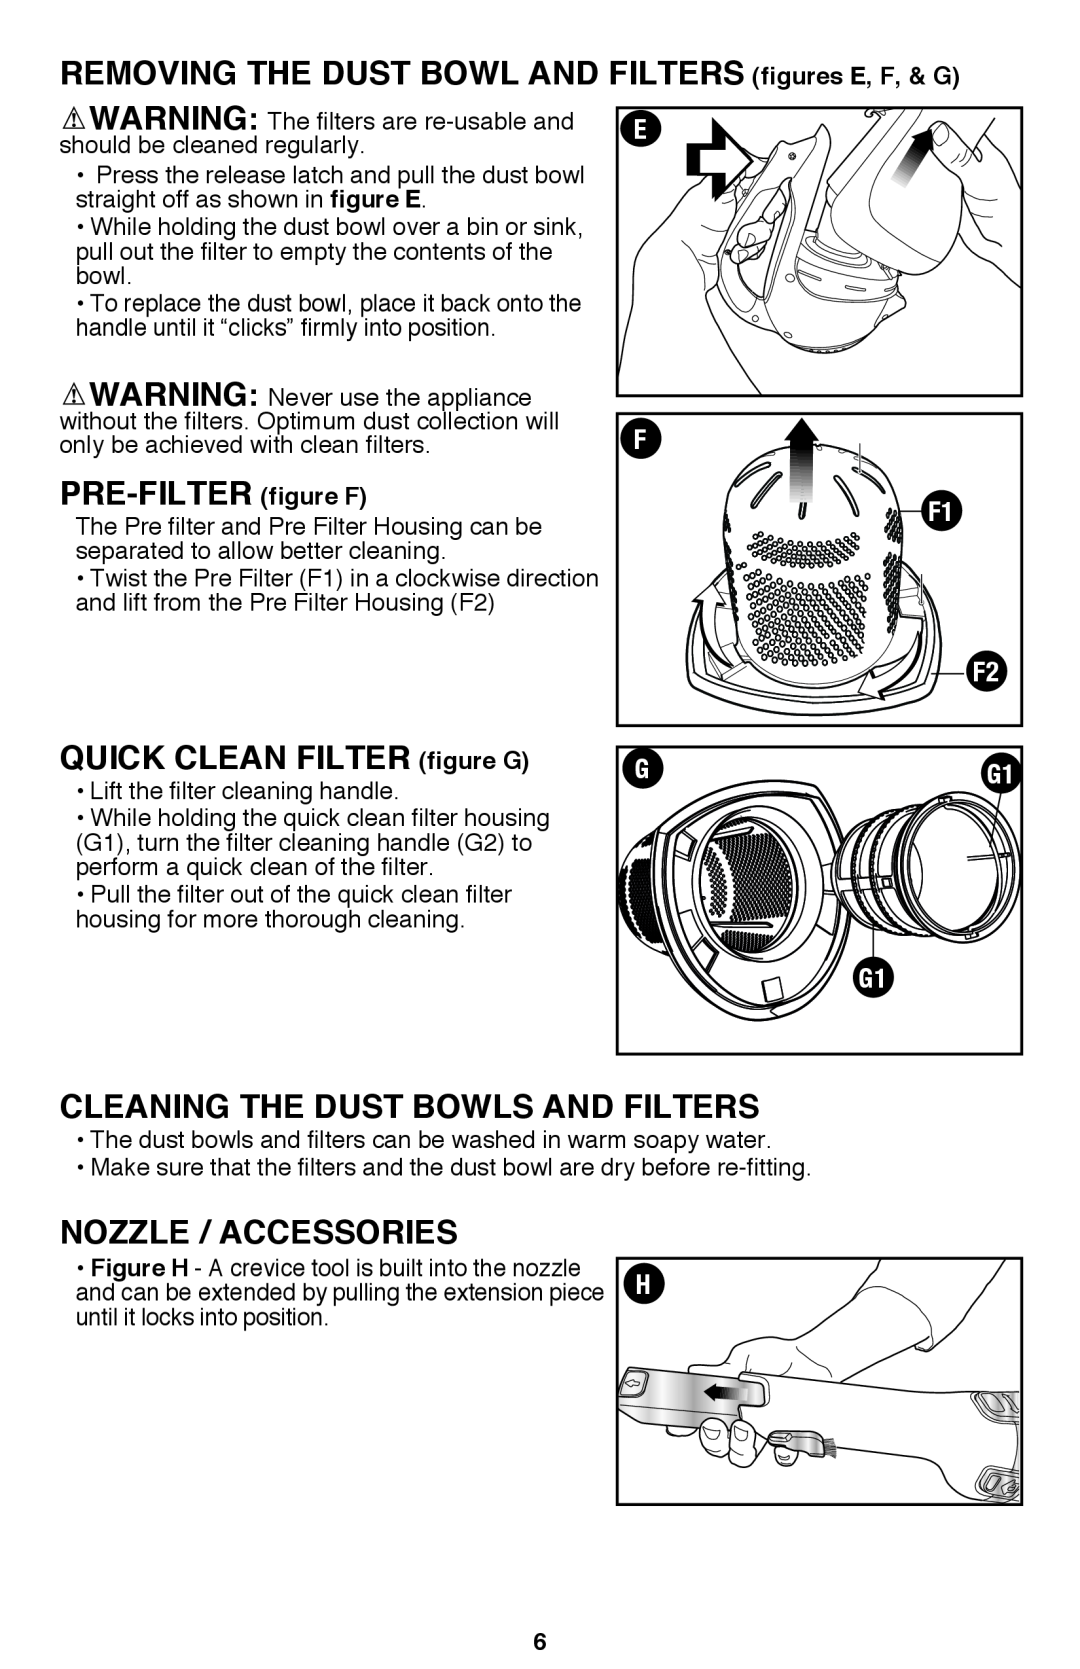 Black & Decker BDH2000L Removing the dust bowl and filters figures E, F, & G, Pre-filter figure F, Nozzle / Accessories 